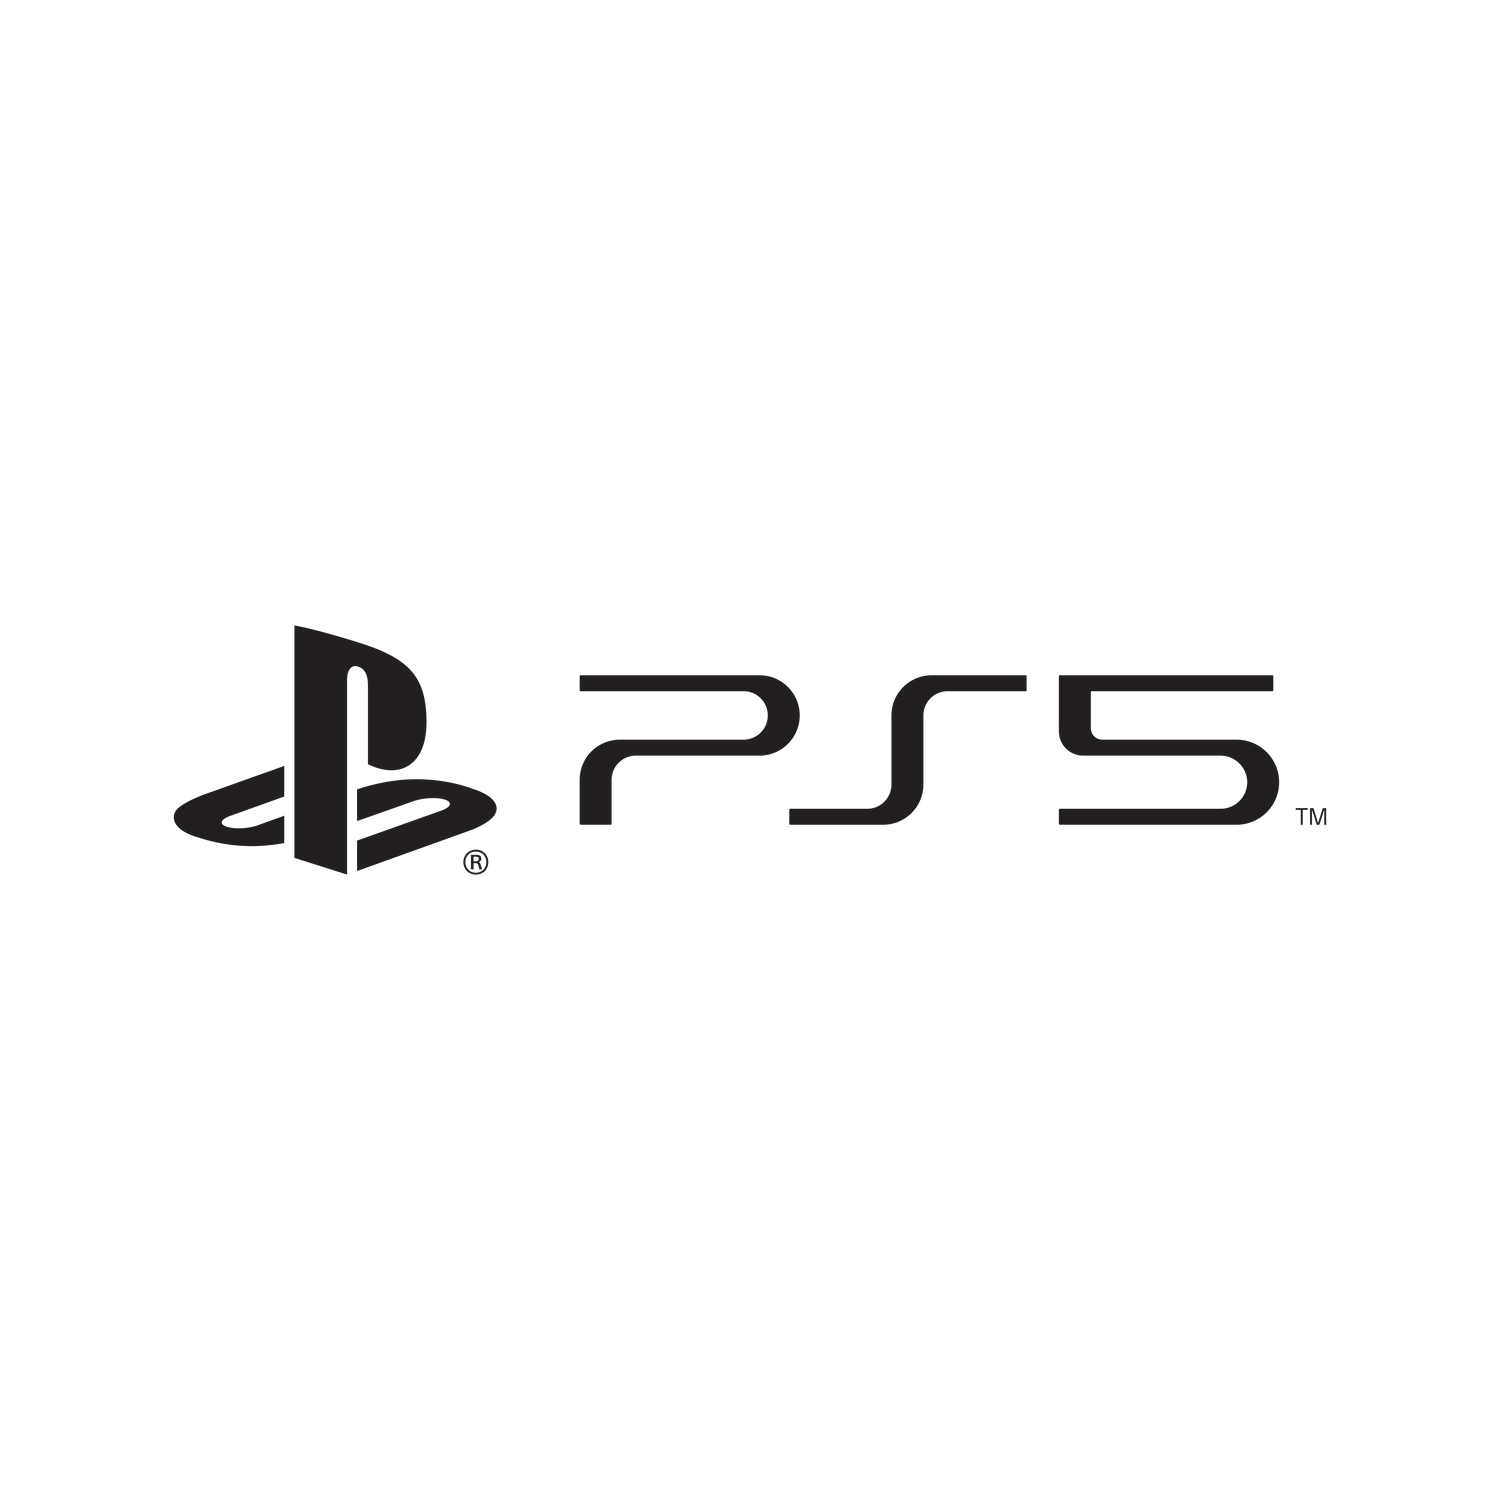 Juegos PlayStation 5